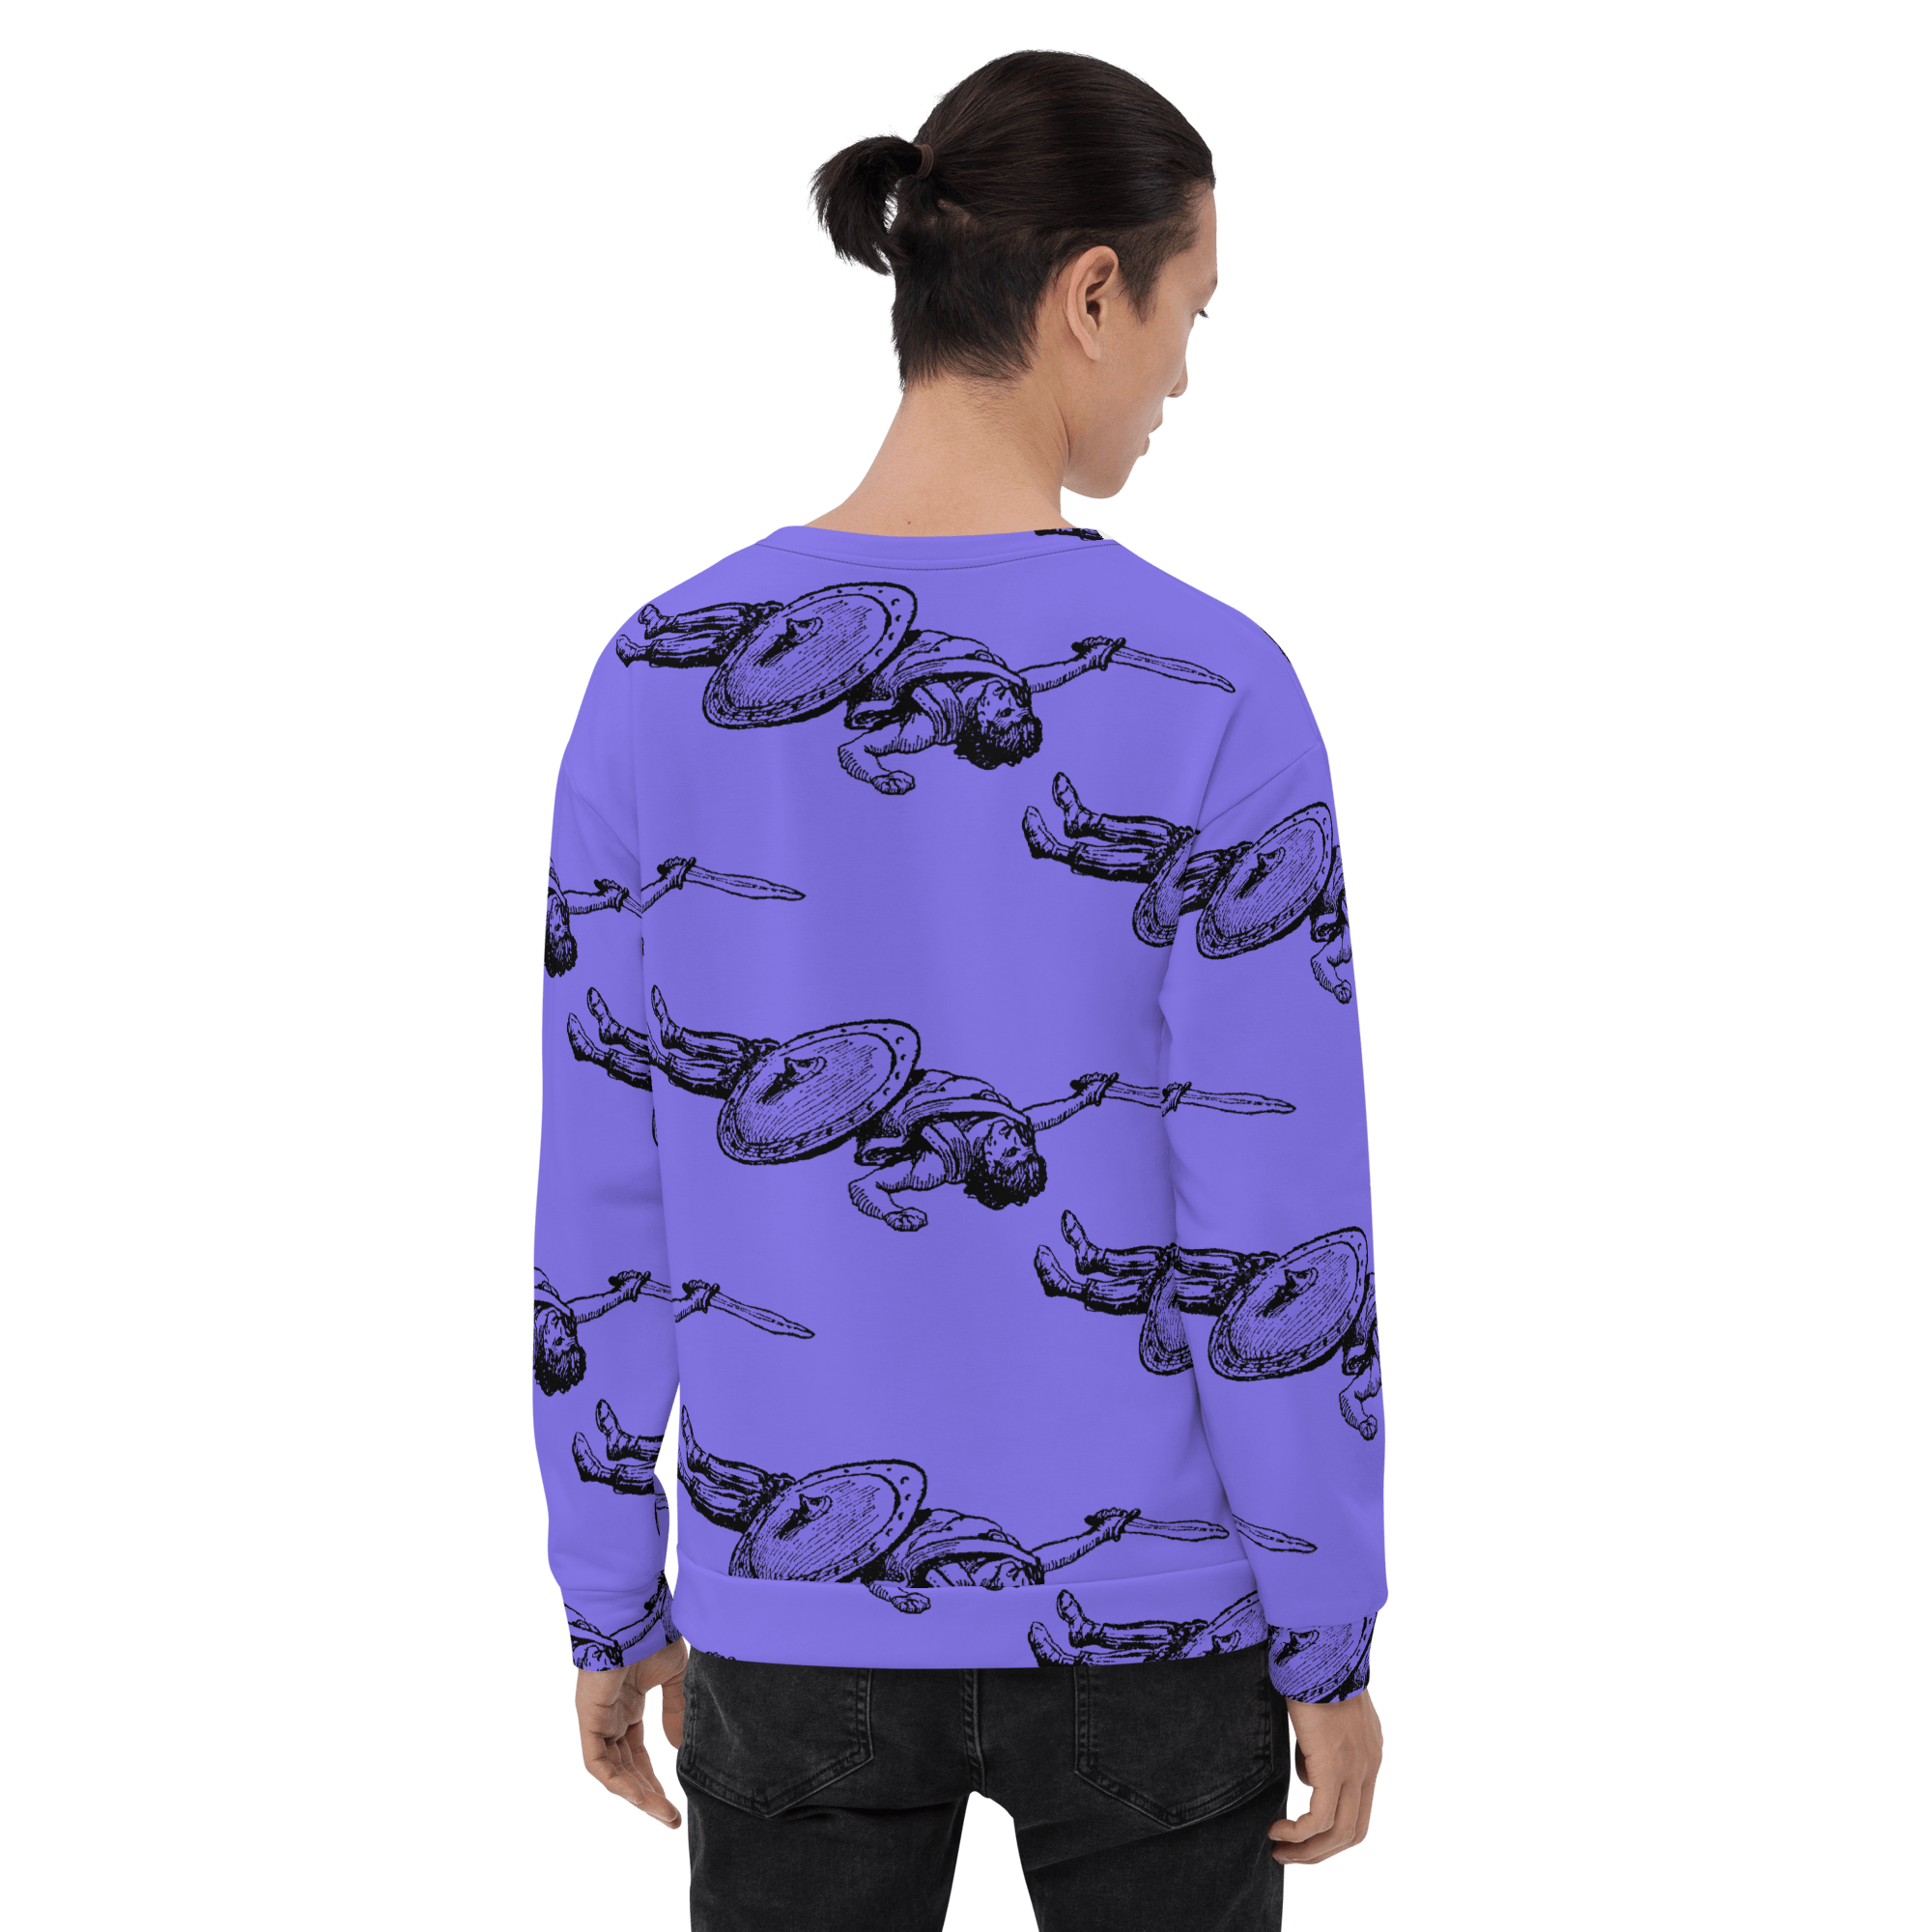 cest fini® Deluxe Sweatshirt (only 10 on sale) - Kikillo Club